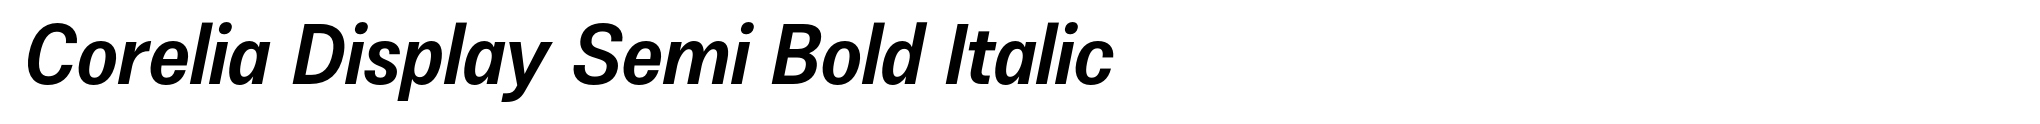 Corelia Display Semi Bold Italic image